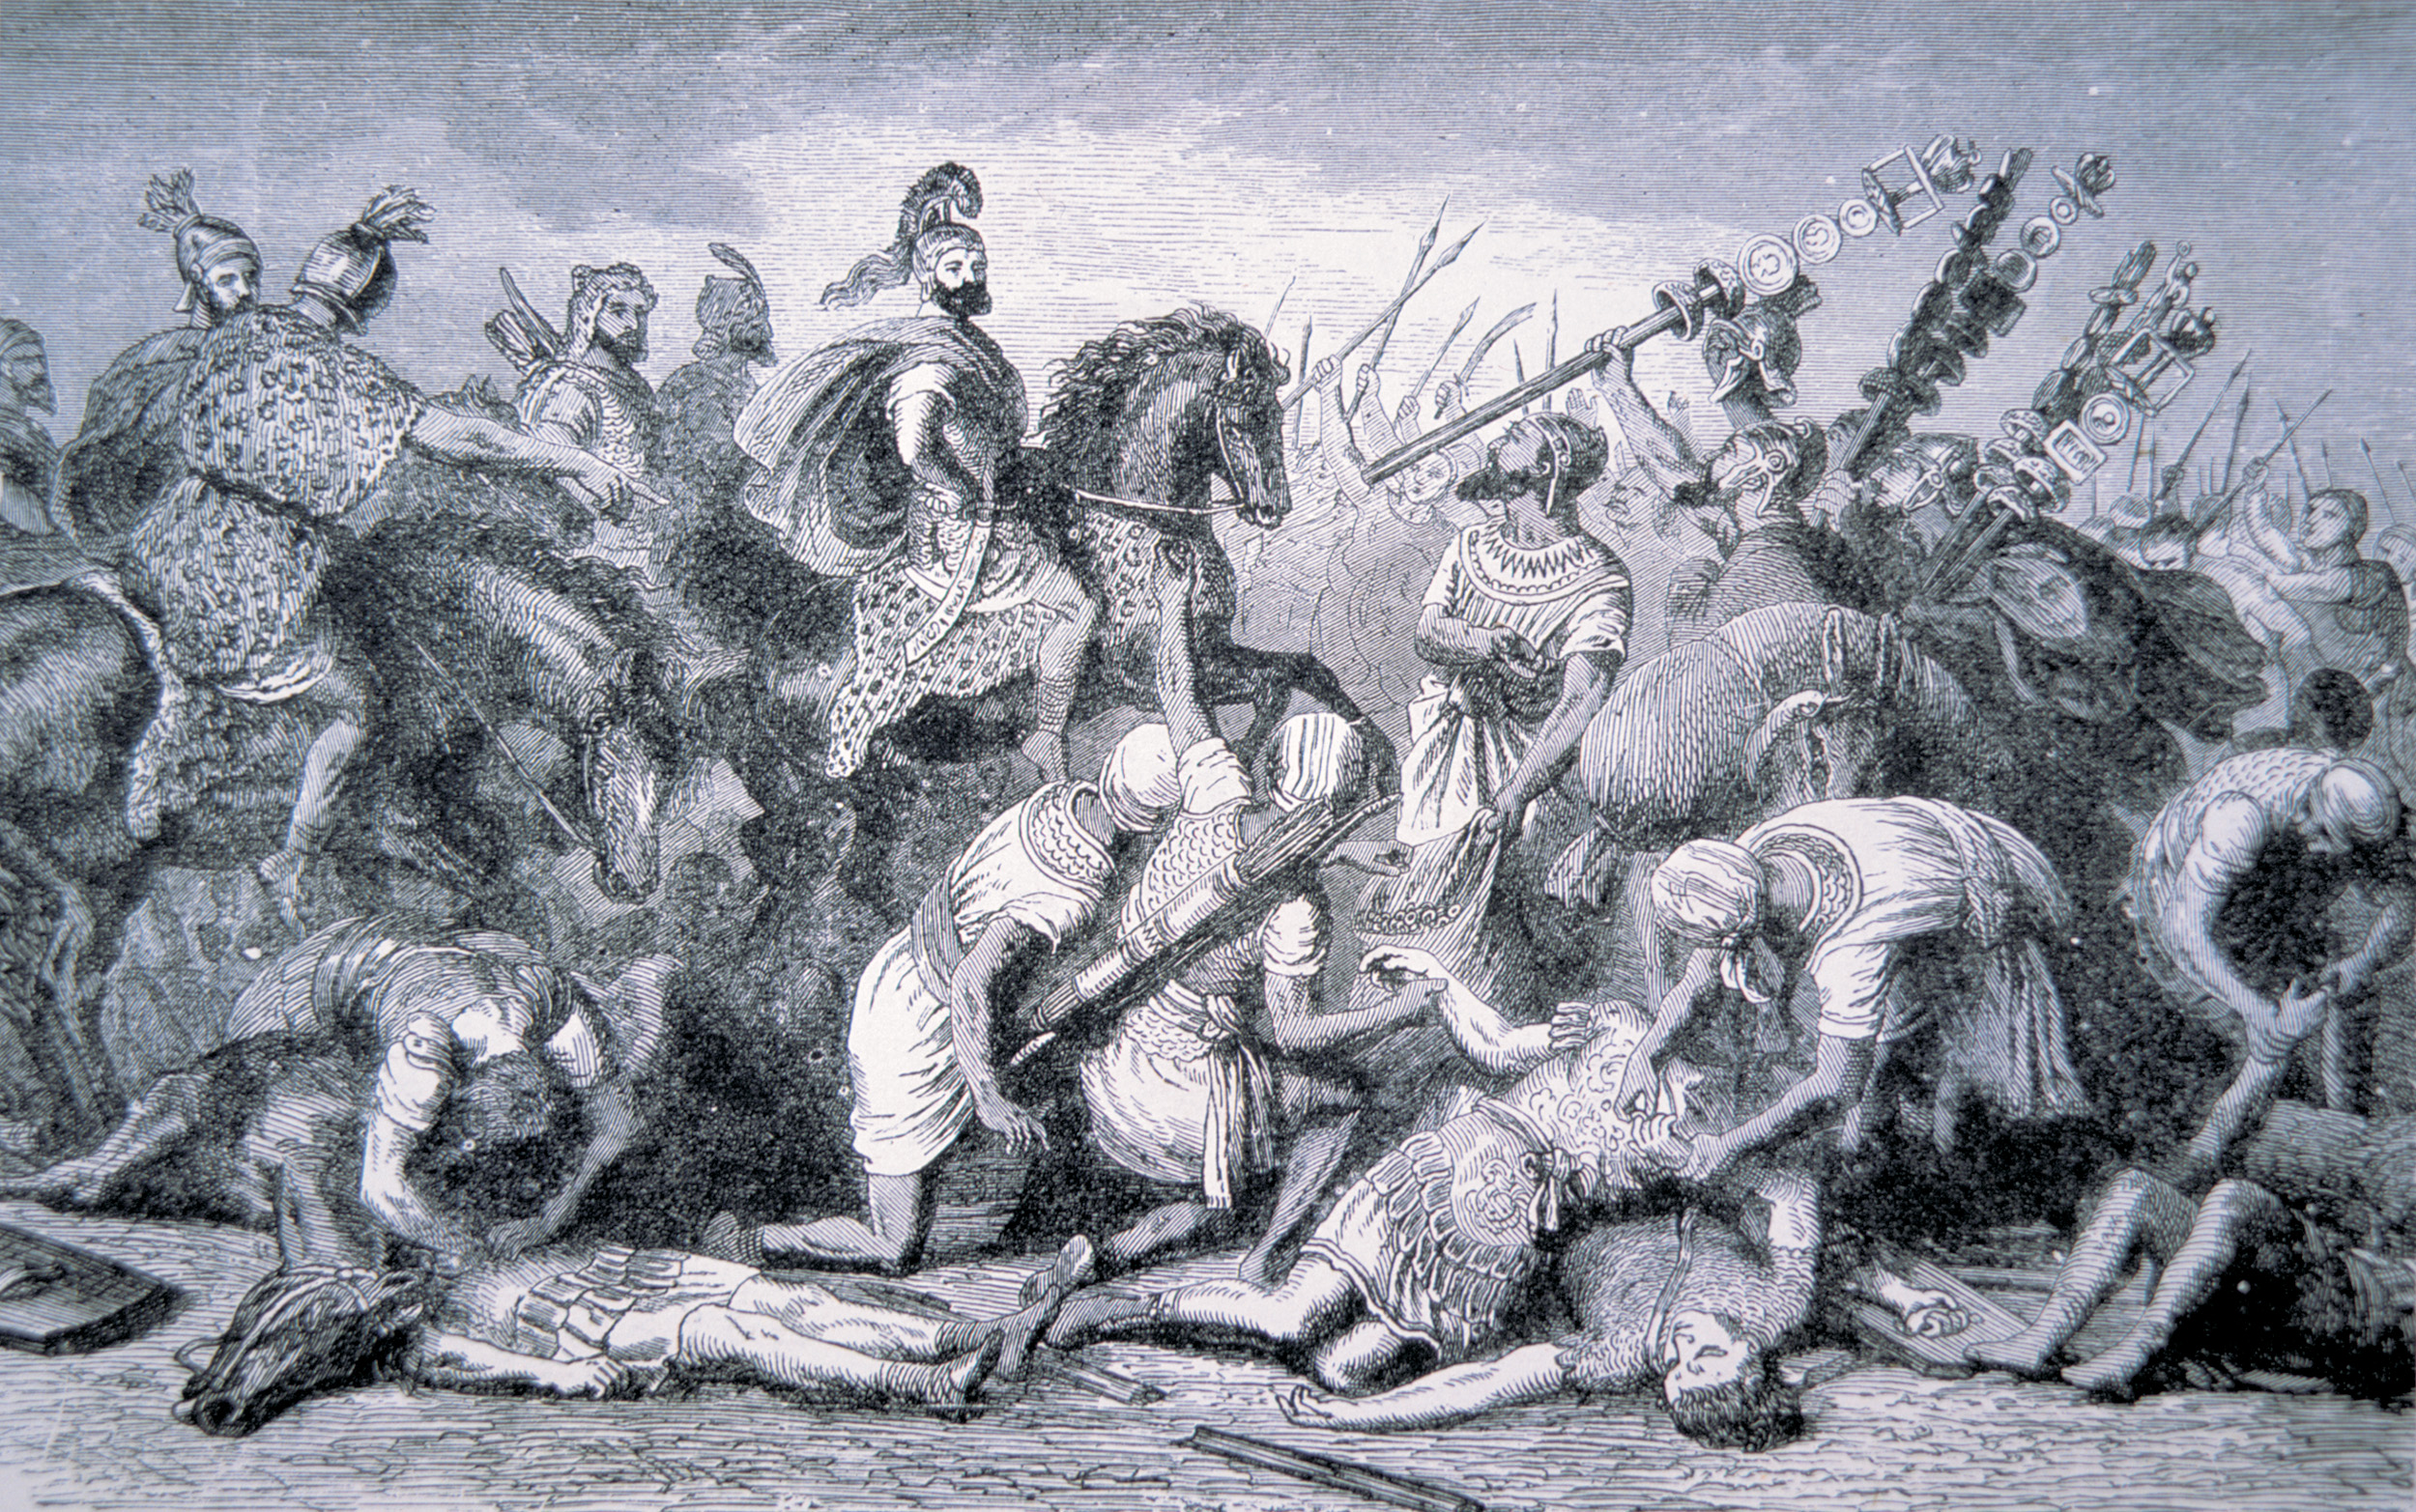 Hannibal’s men stripping Roman dead at Cannae.